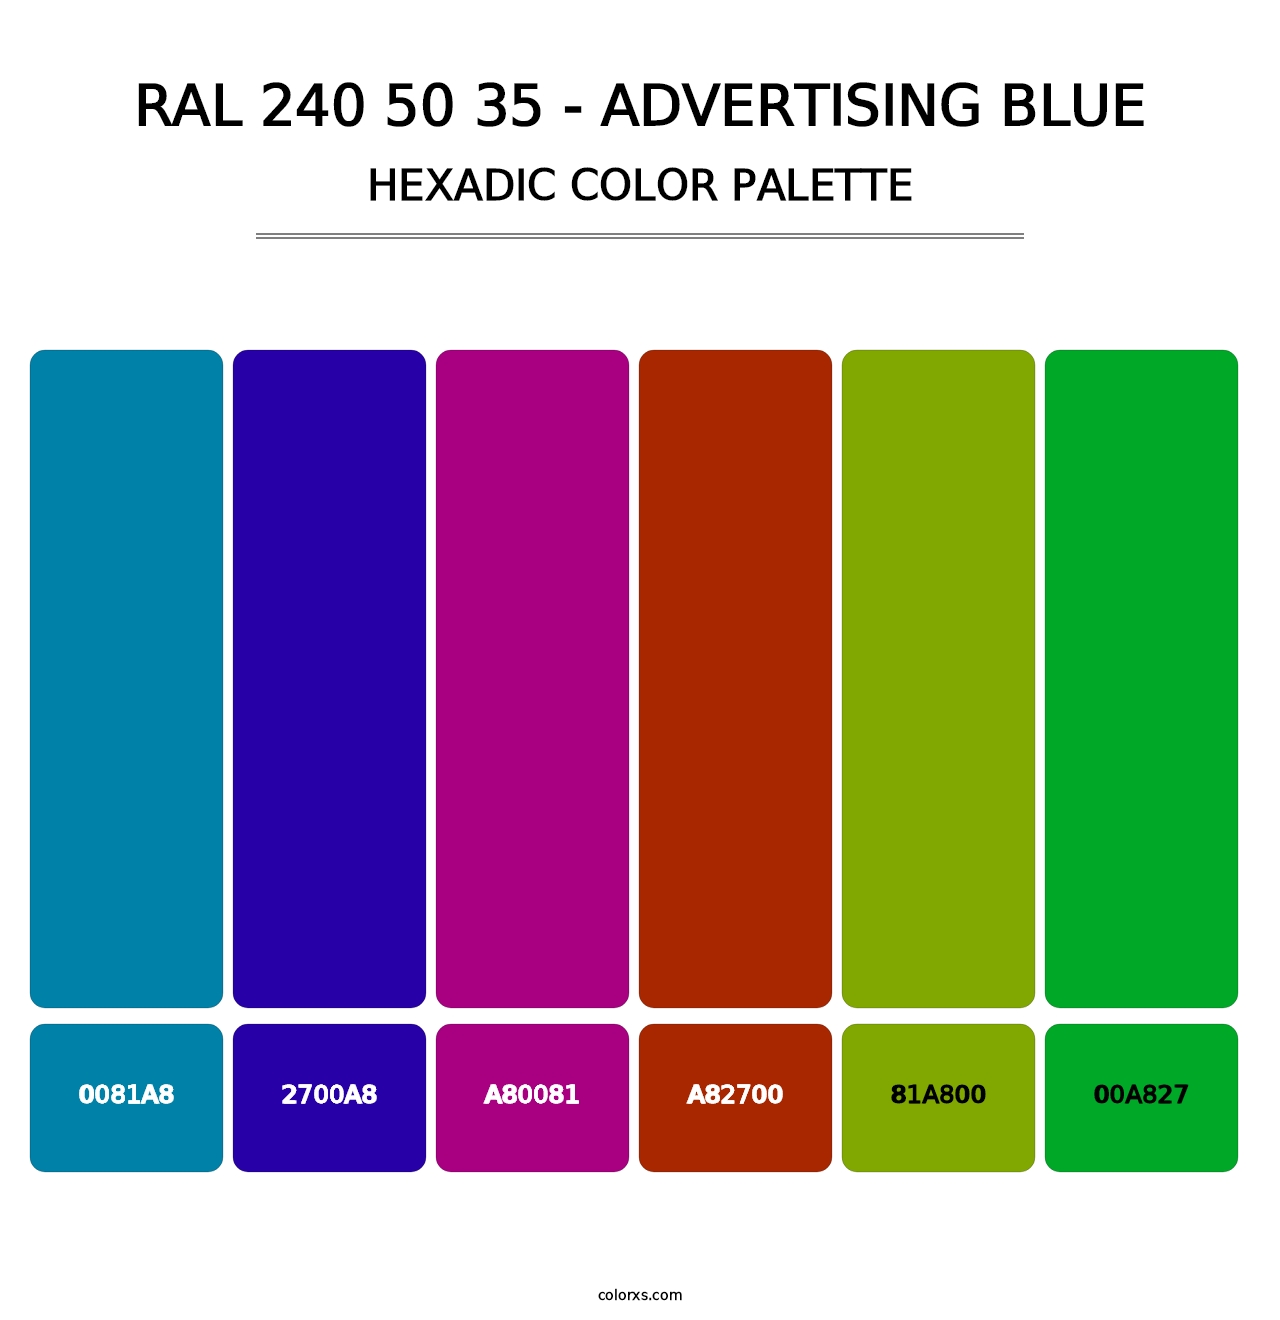 RAL 240 50 35 - Advertising Blue - Hexadic Color Palette